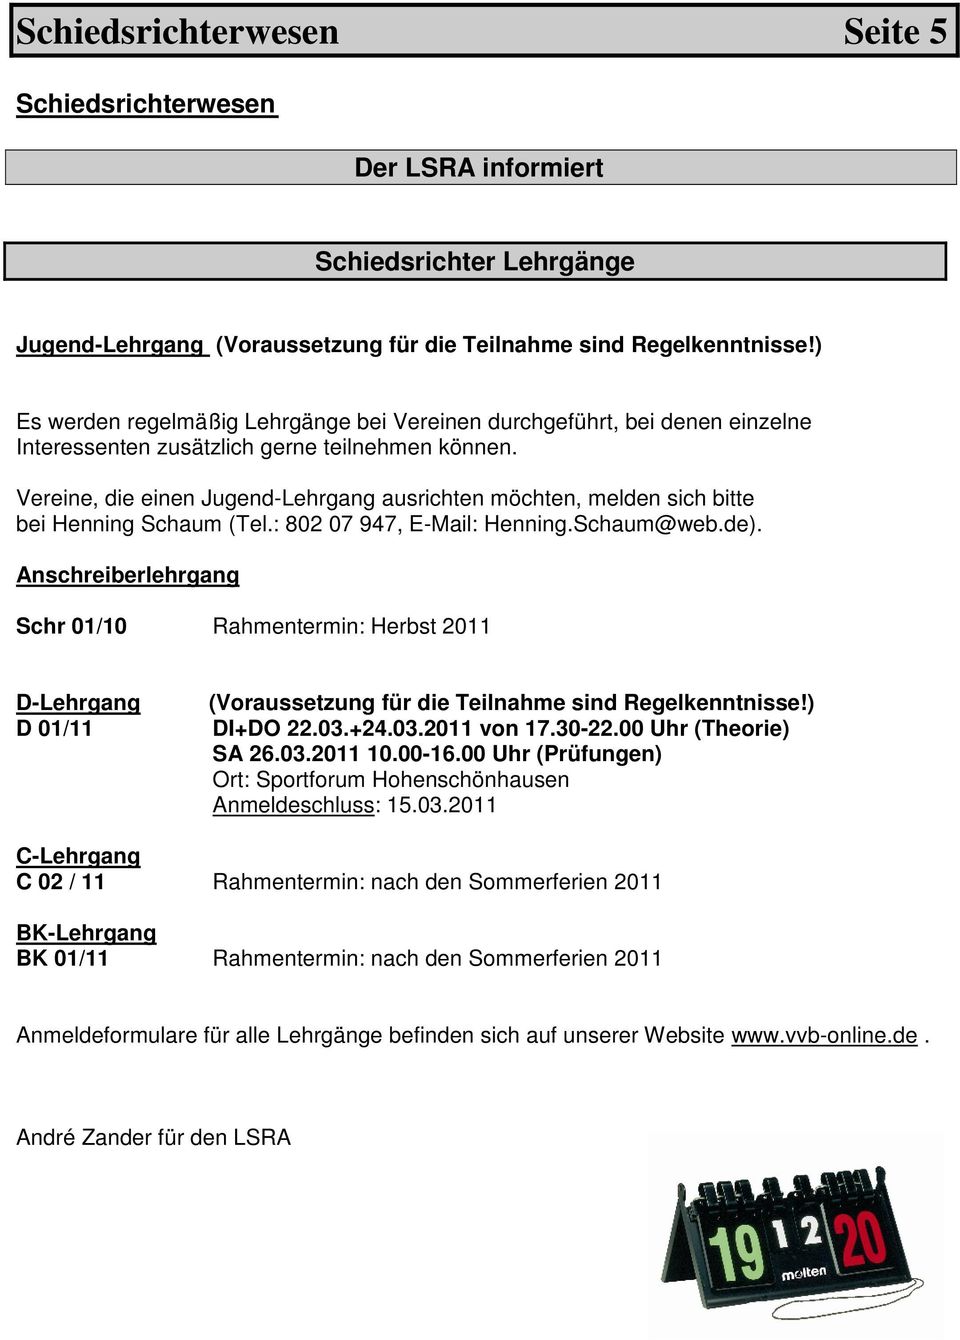 Vereine, die einen Jugend-Lehrgang ausrichten möchten, melden sich bitte bei Henning Schaum (Tel.: 802 07 947, E-Mail: Henning.Schaum@web.de).